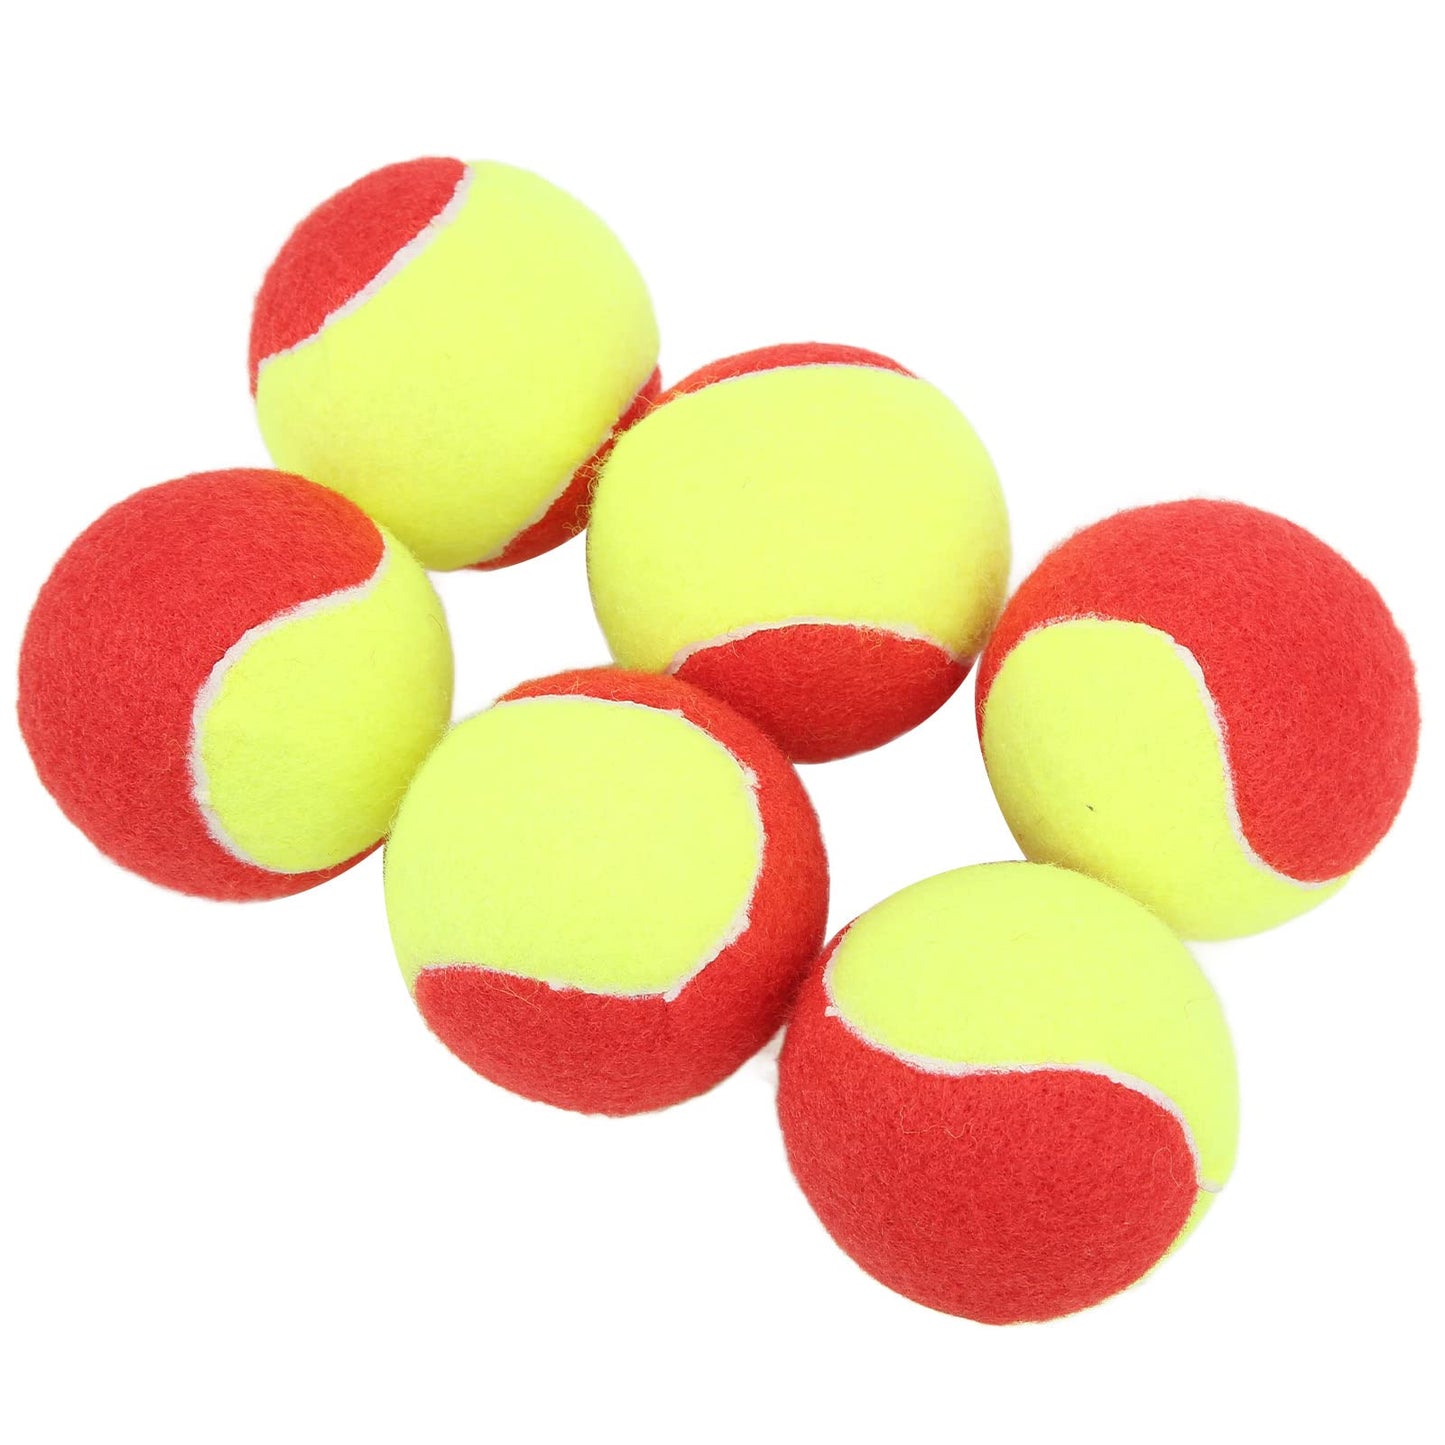 Kids Training Tennis Balls, 6Pcs Soft Elastic Waterproof Youth Tennis Ball, Premium Plush Rubber Pressureless Training Exercise Tennis Balls for Beginners and Kids